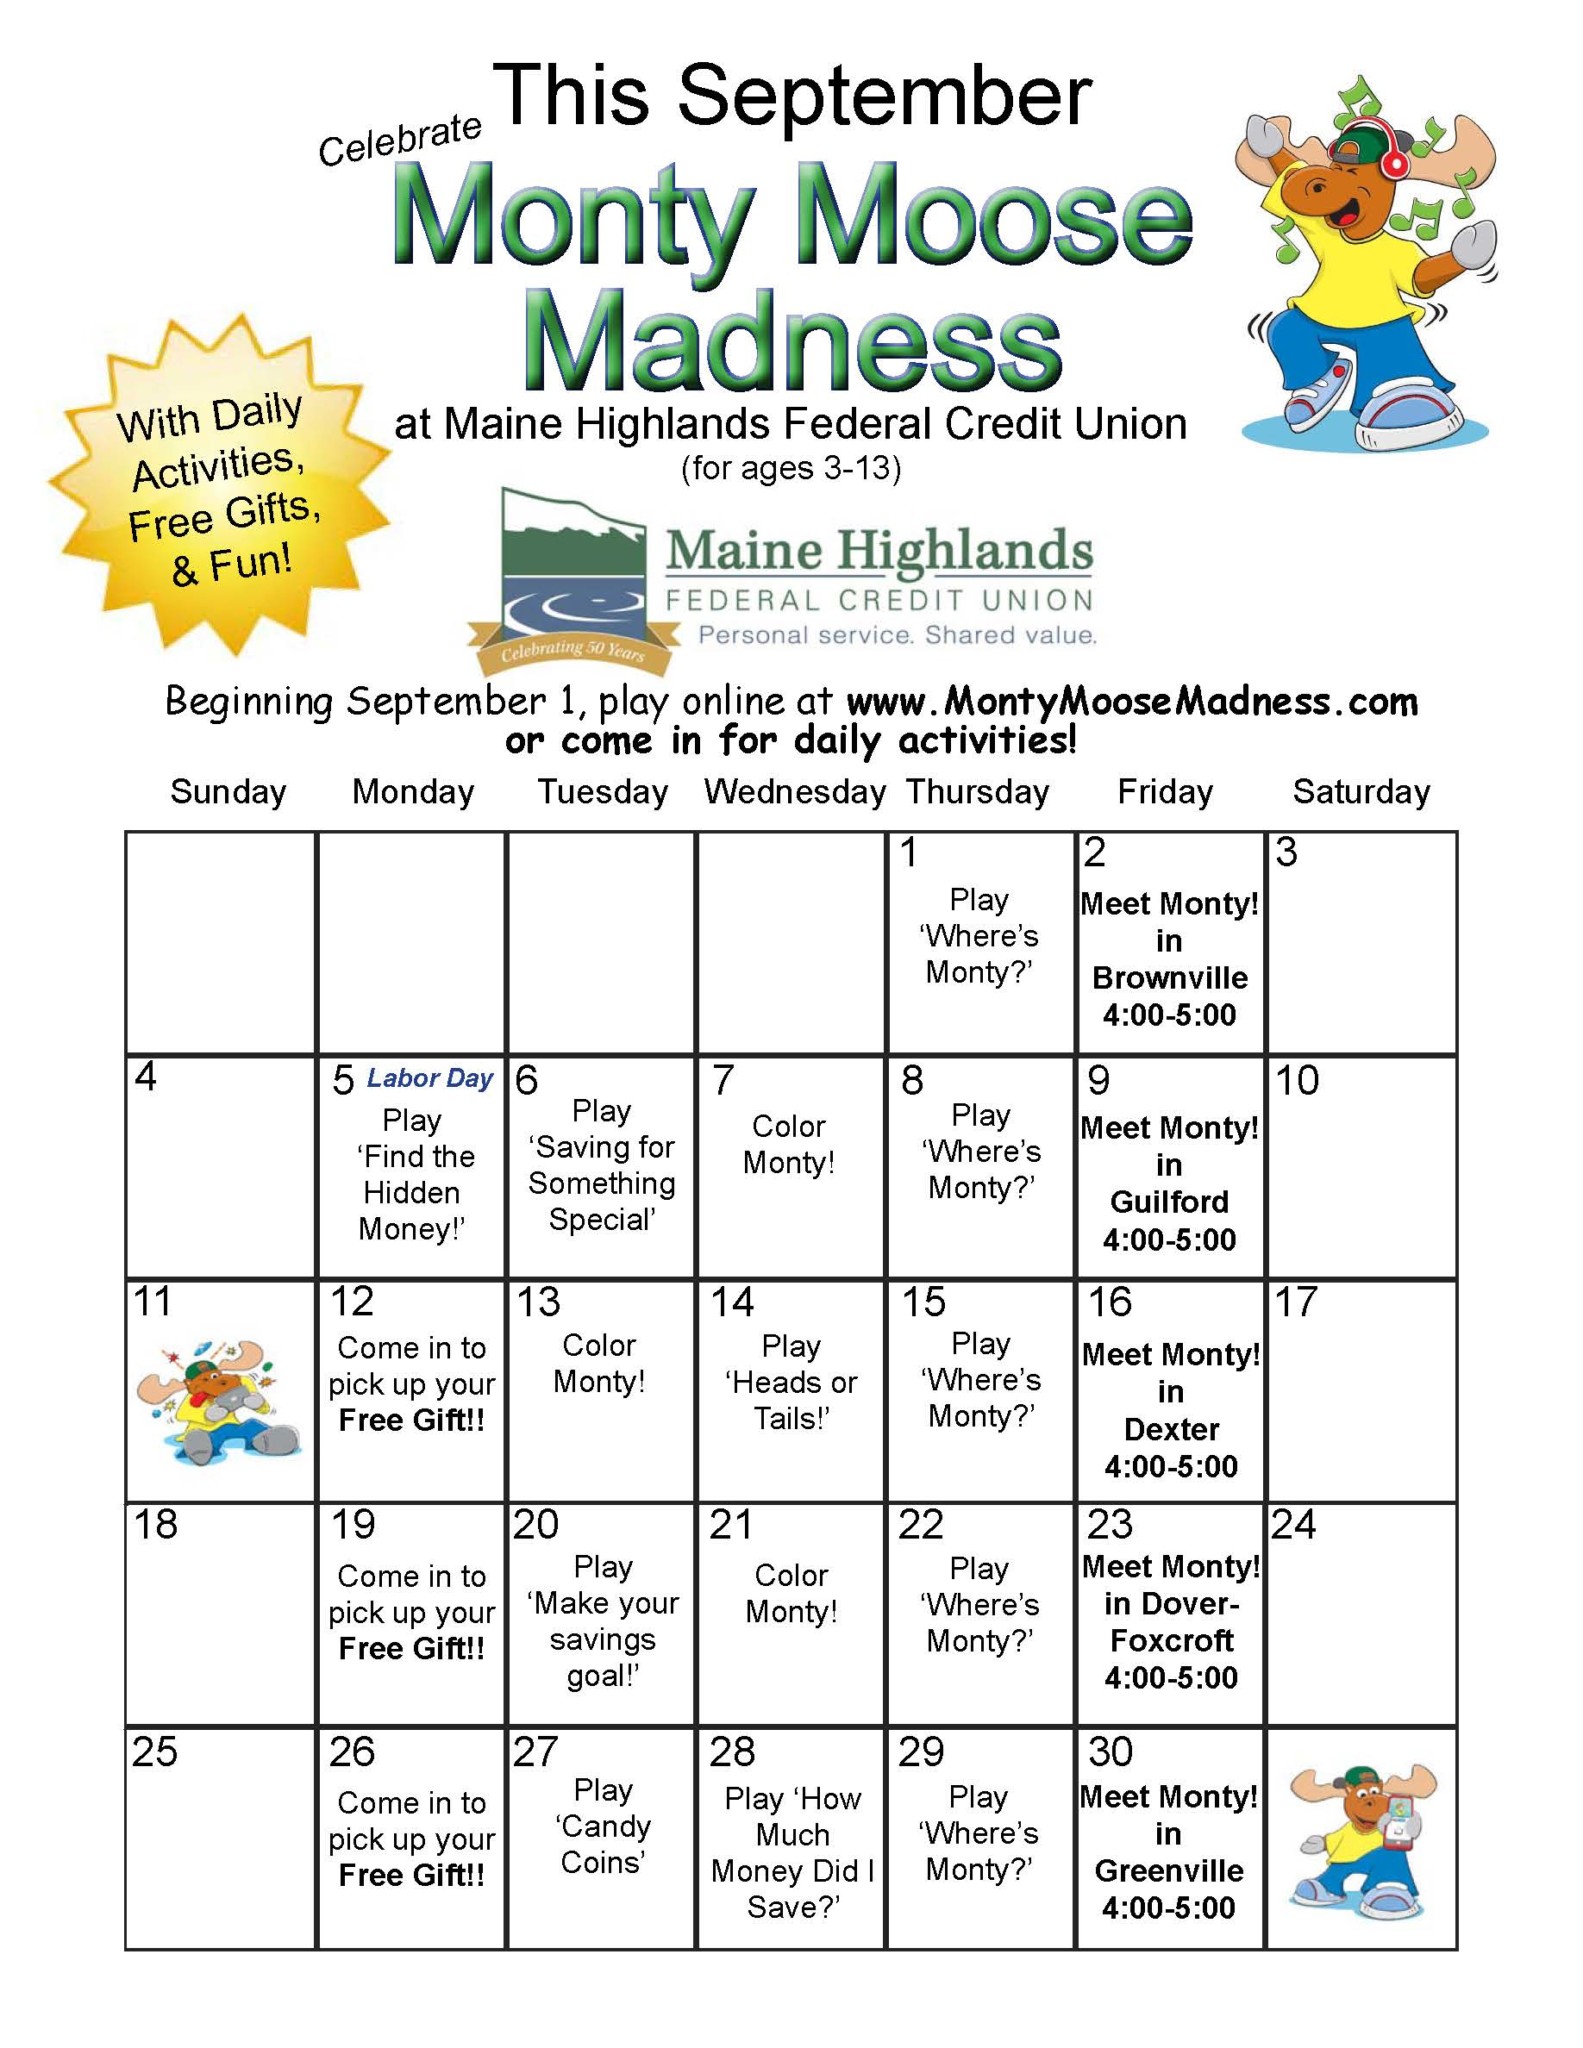 Monty Moose Madness Calendar Maine Highlands Federal Credit Union